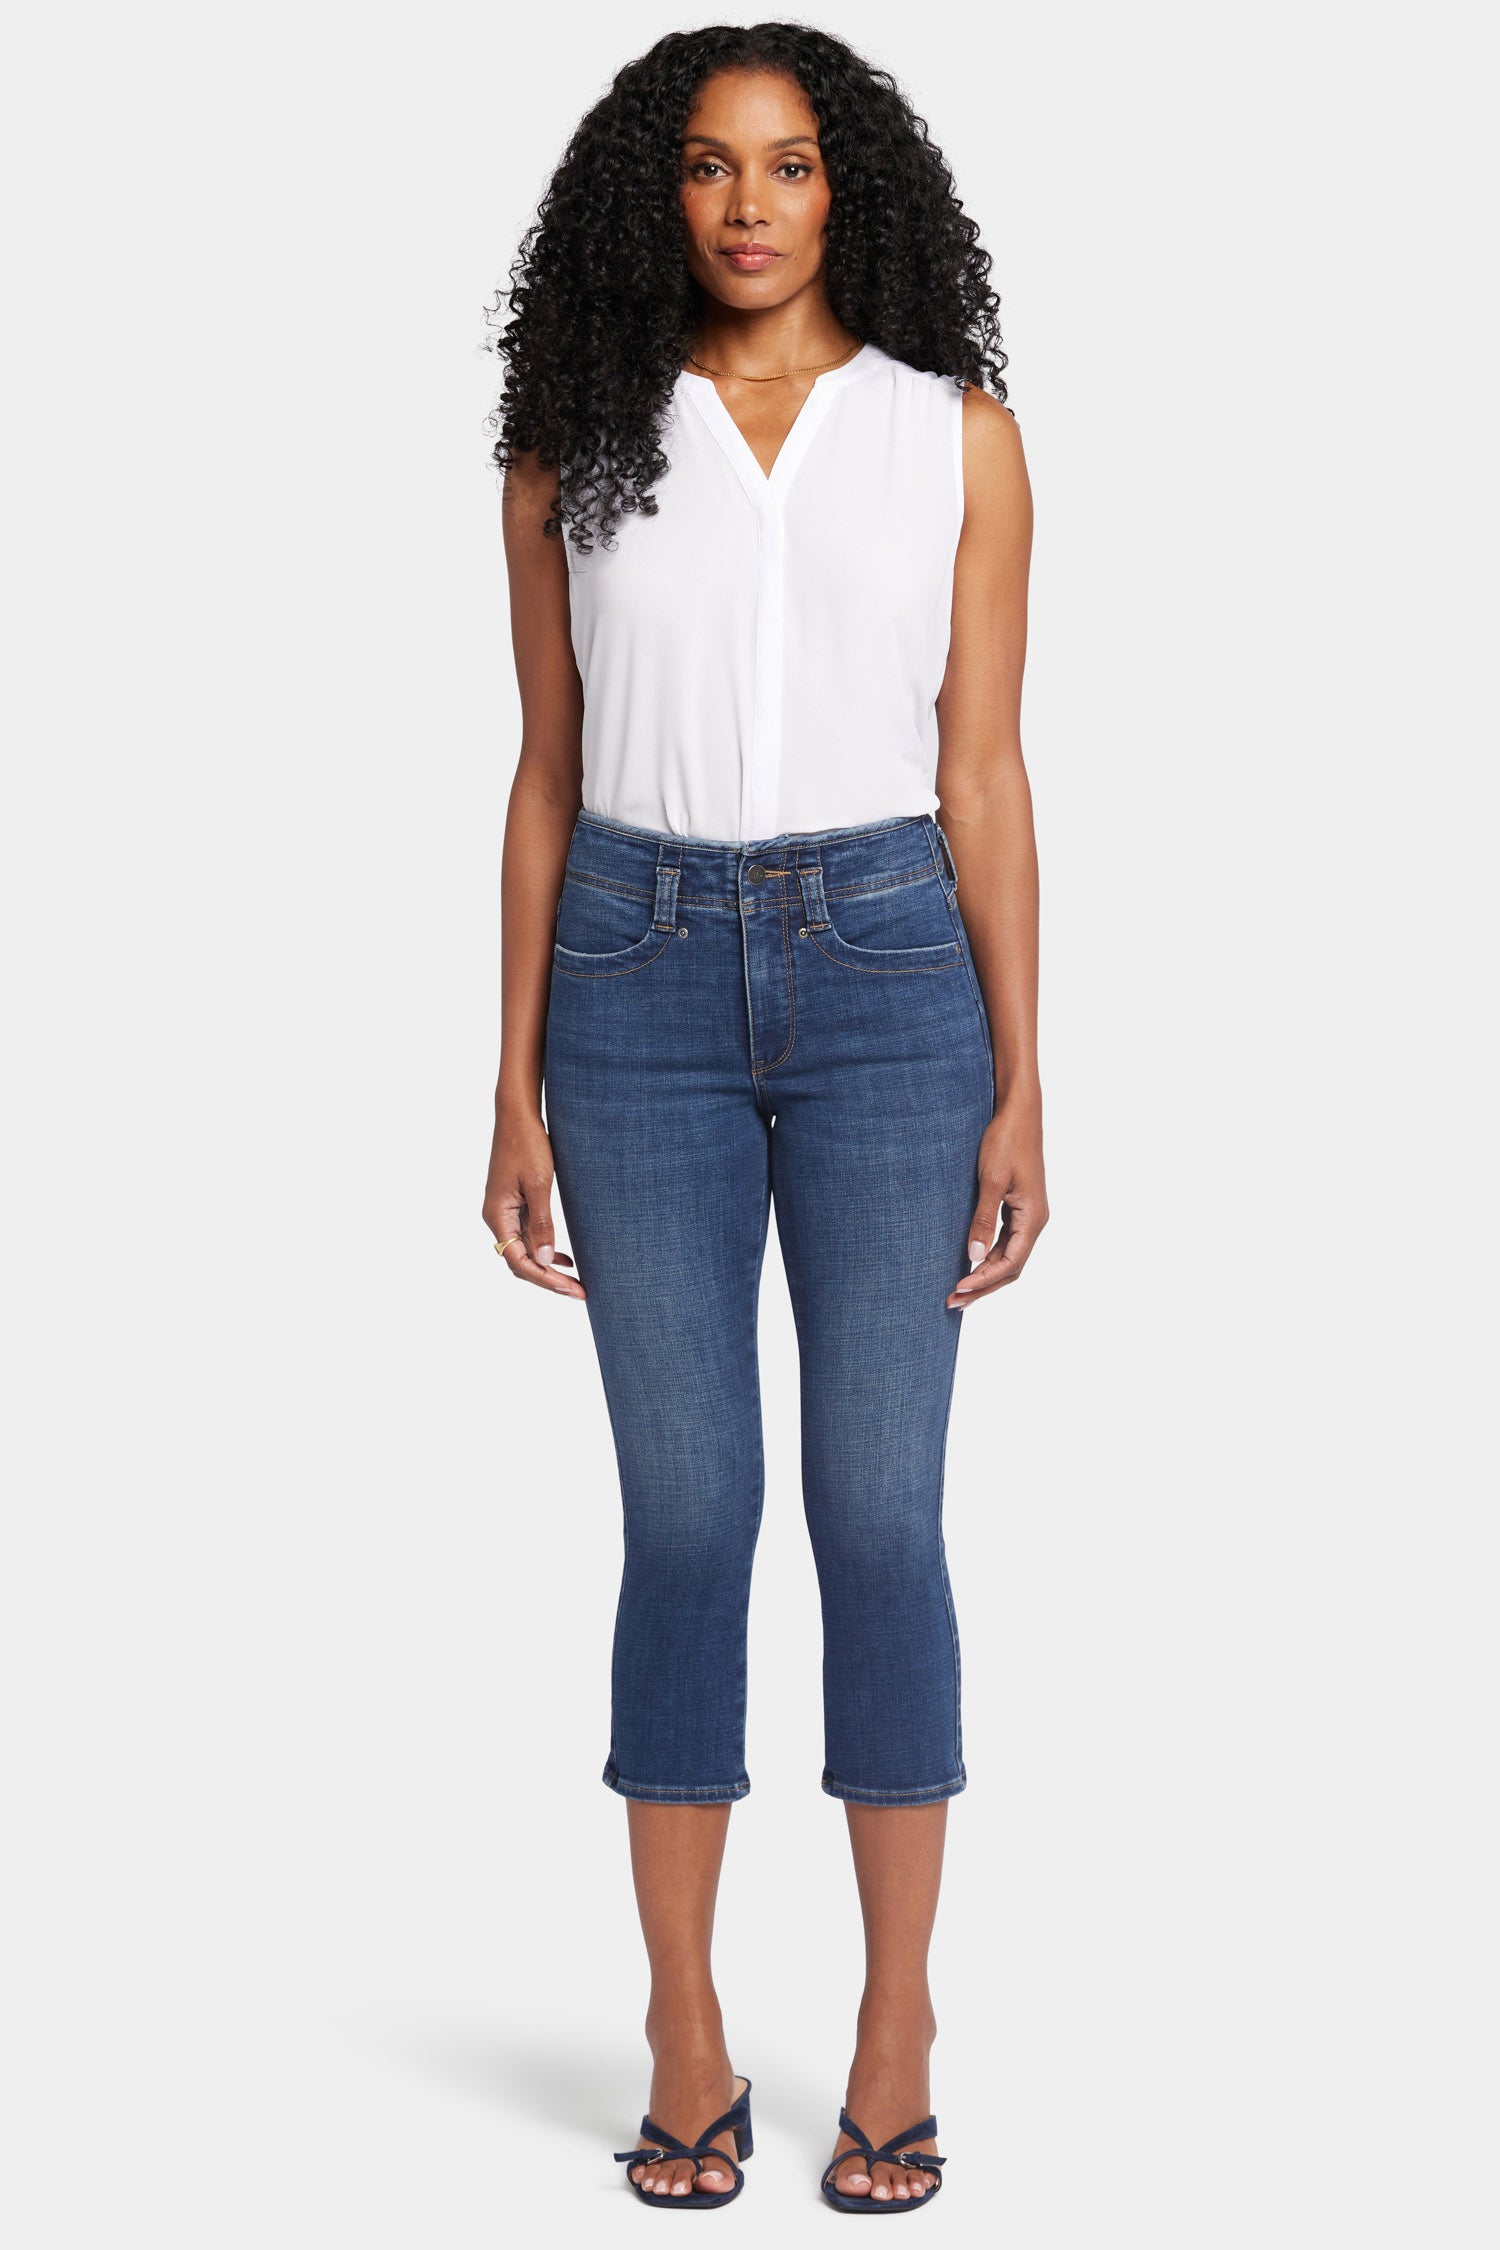 NYDJ Official Website, The Original Slimming Jeans